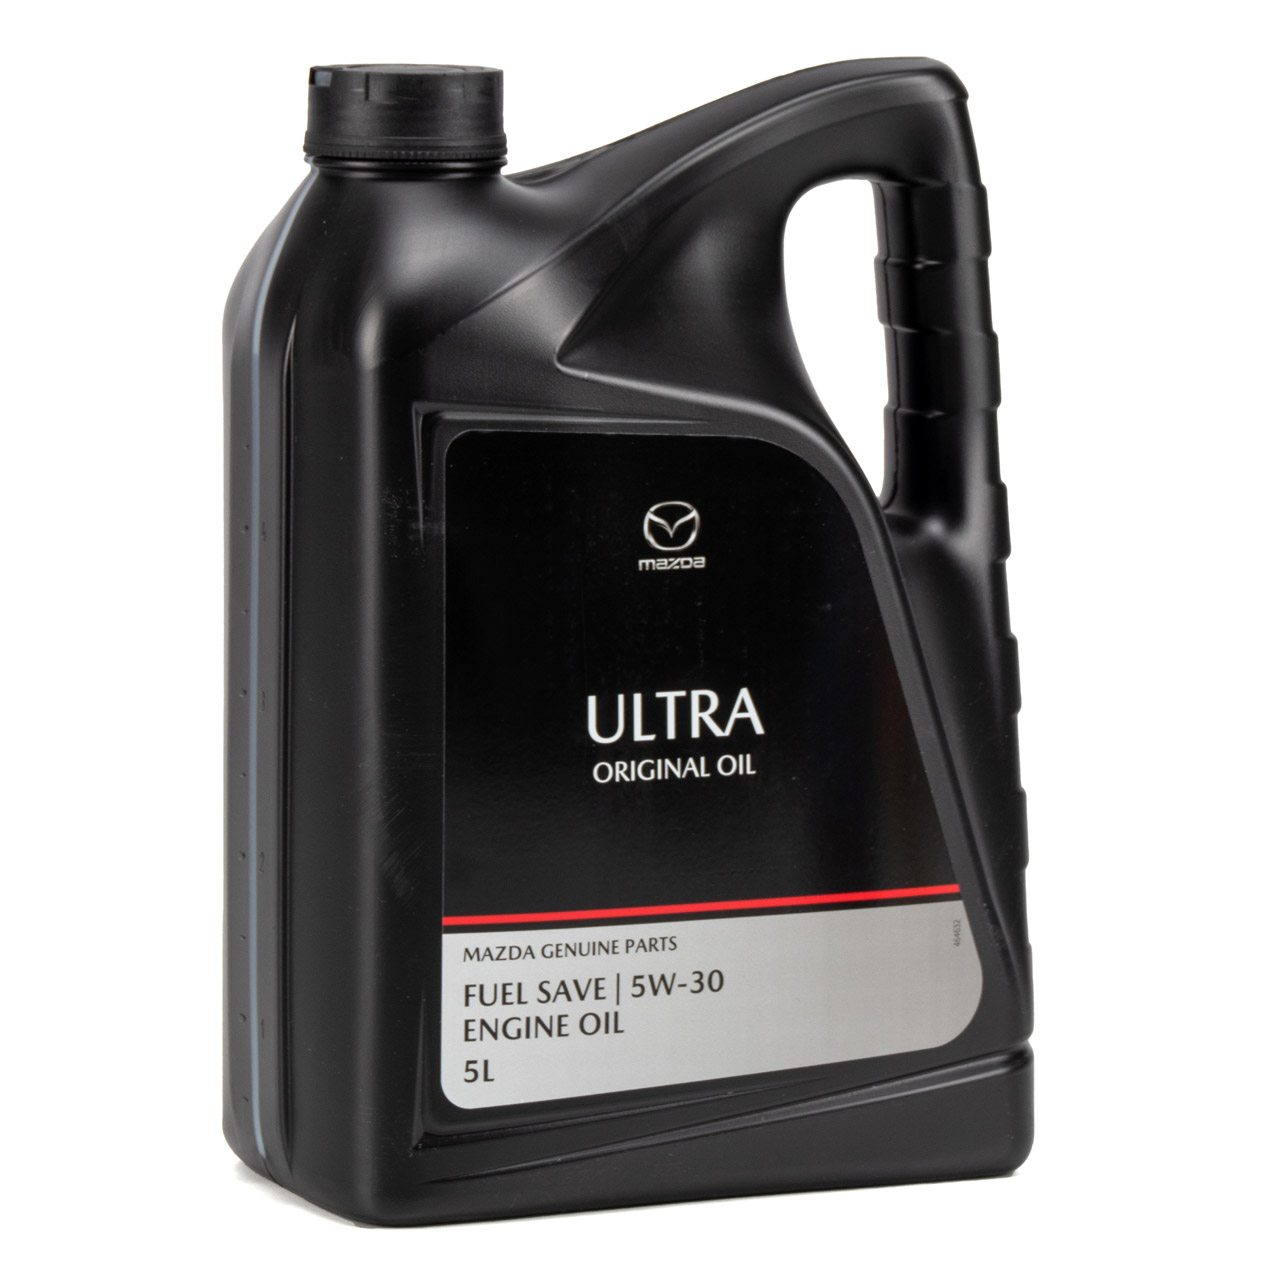 5L ORIGINAL ULTRA 5W30 FUEL SAVE Motoröl + MANN Ölfilter FORD MAZDA VOLVO 1.2 1.4 1.6